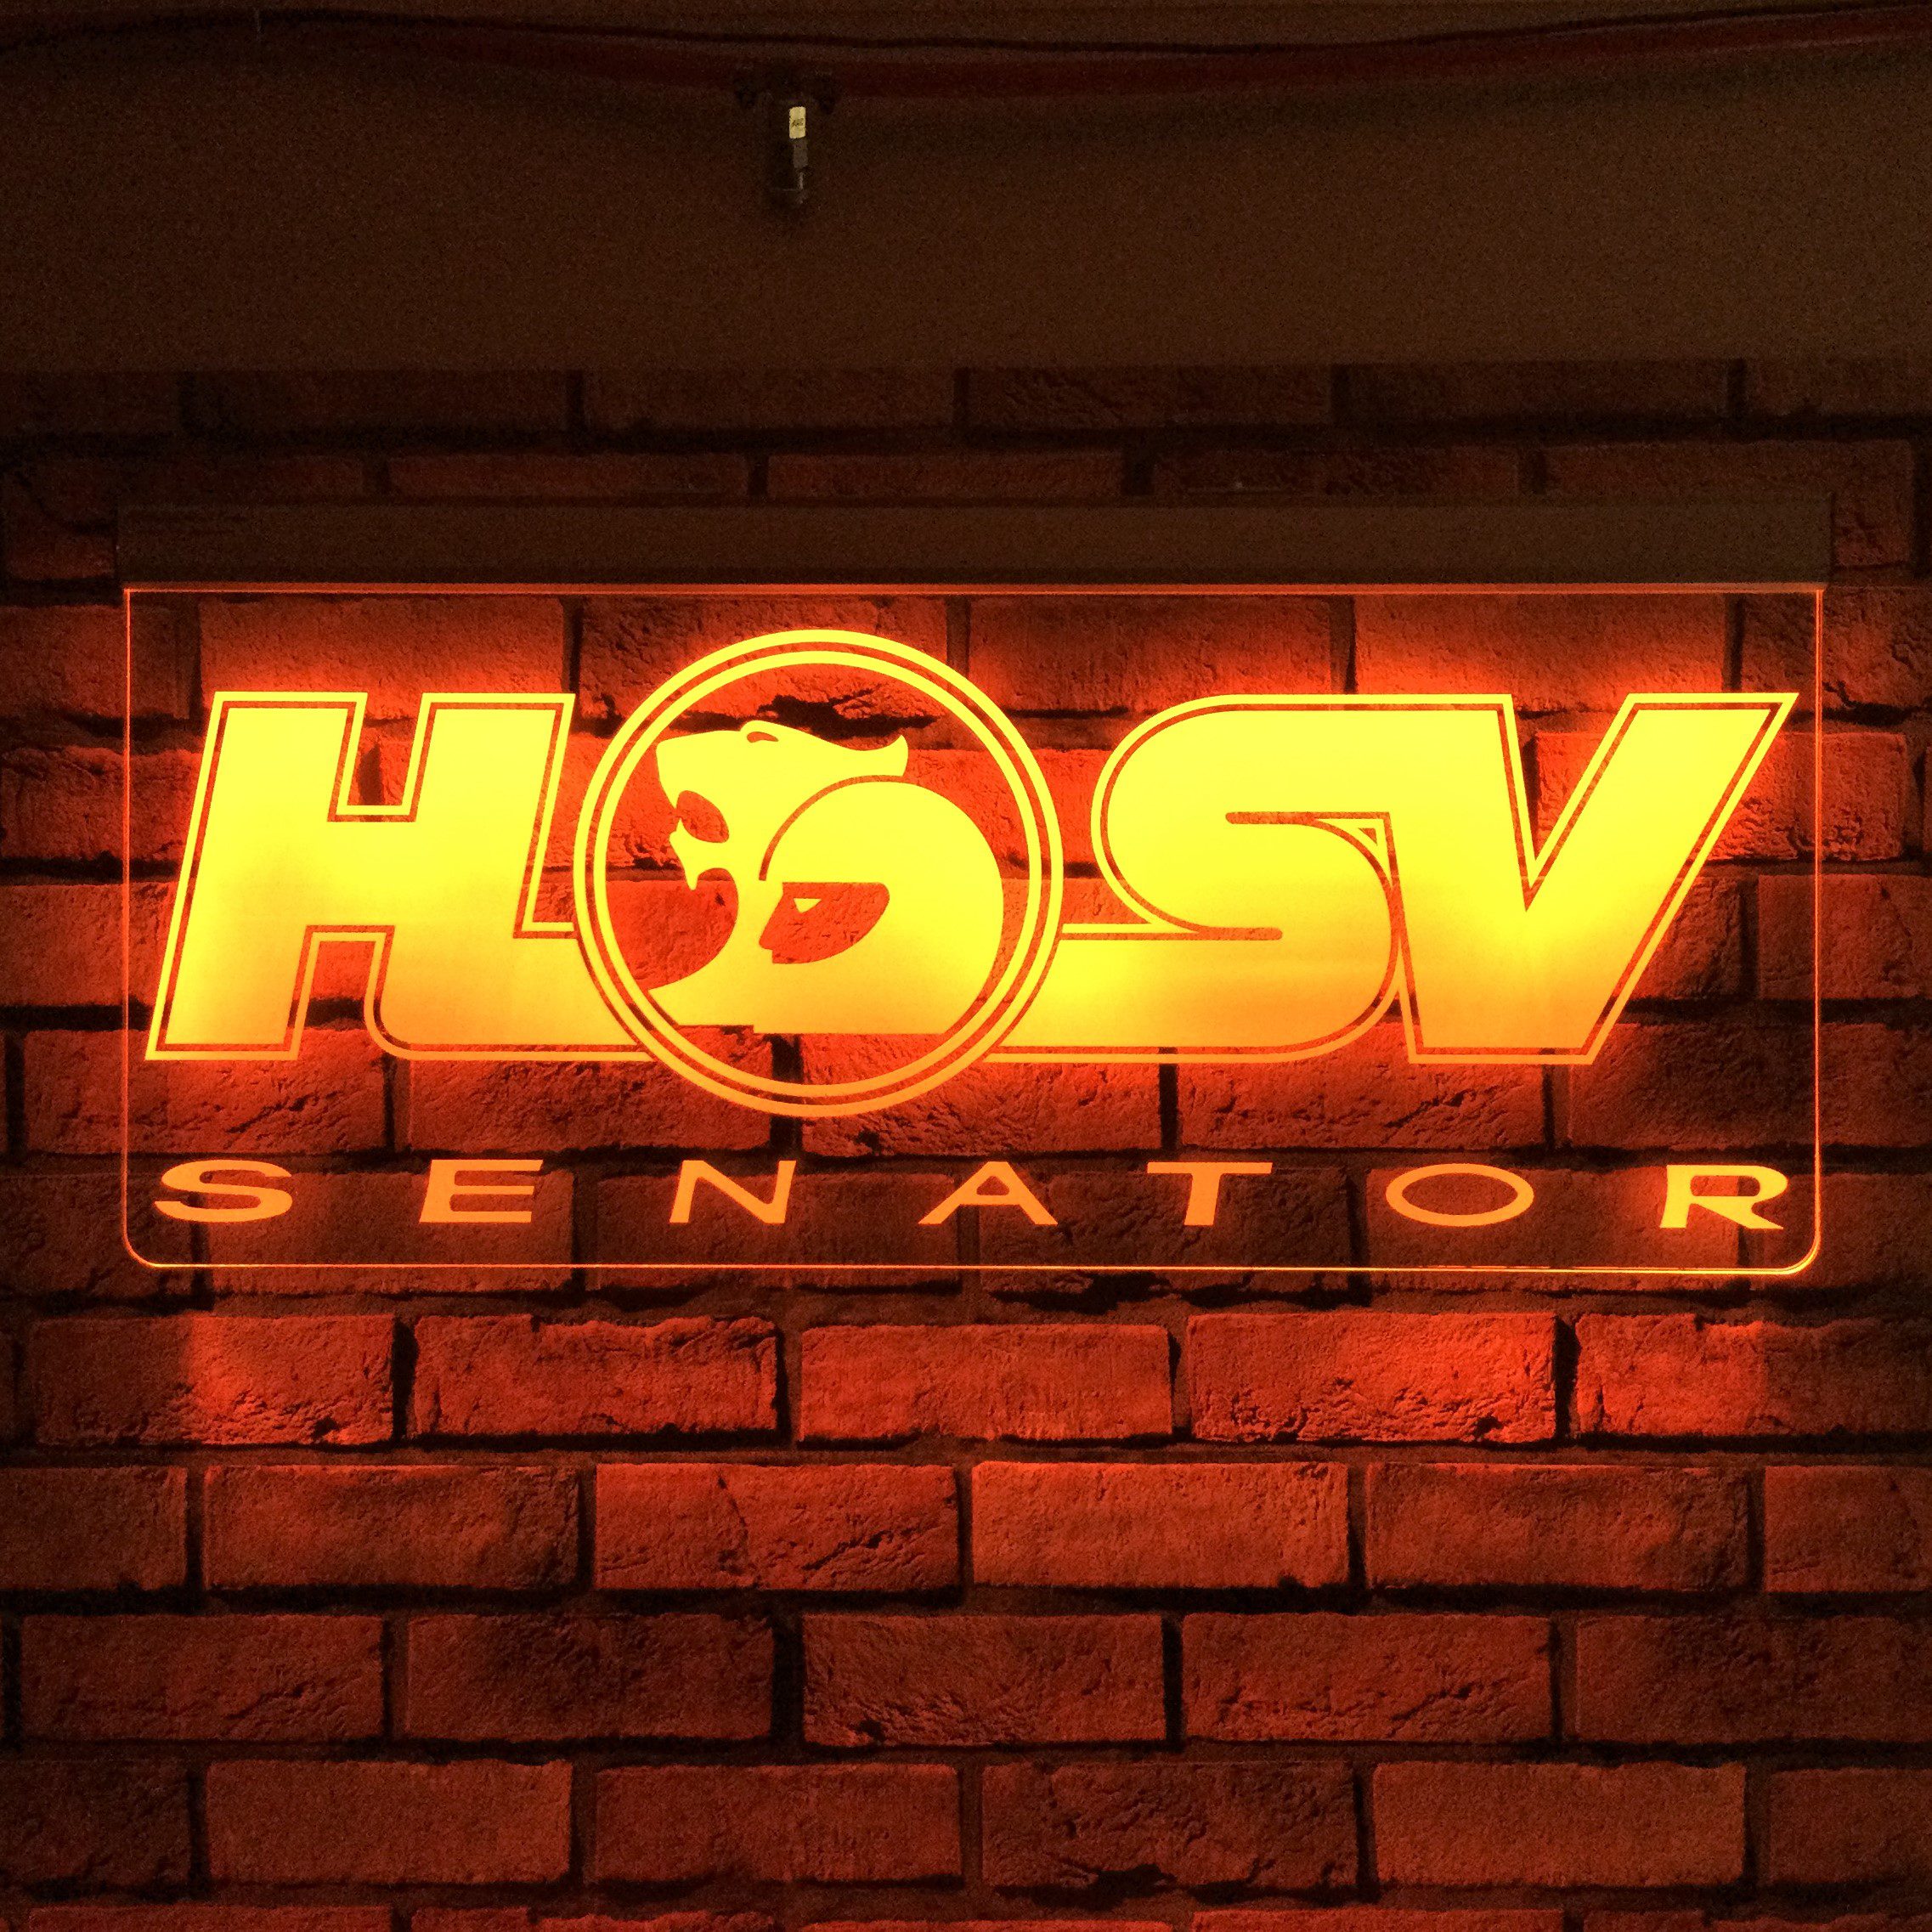 HSV Senator LED Signs